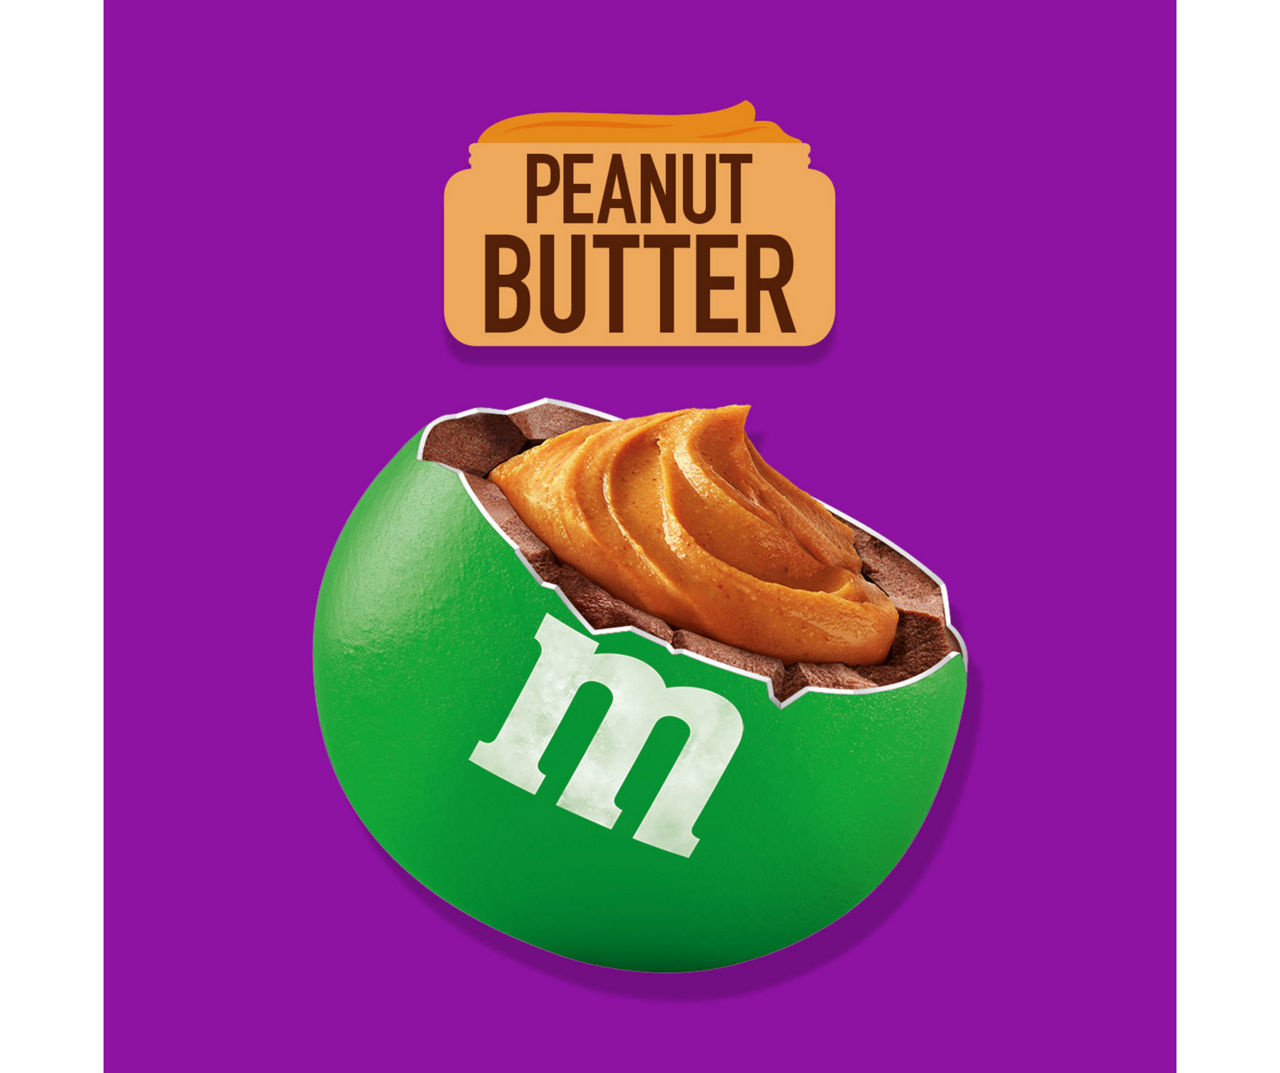 M&M's Peanut Butter Milk Chocolate Candy, Full Size - 1.63 oz Bag